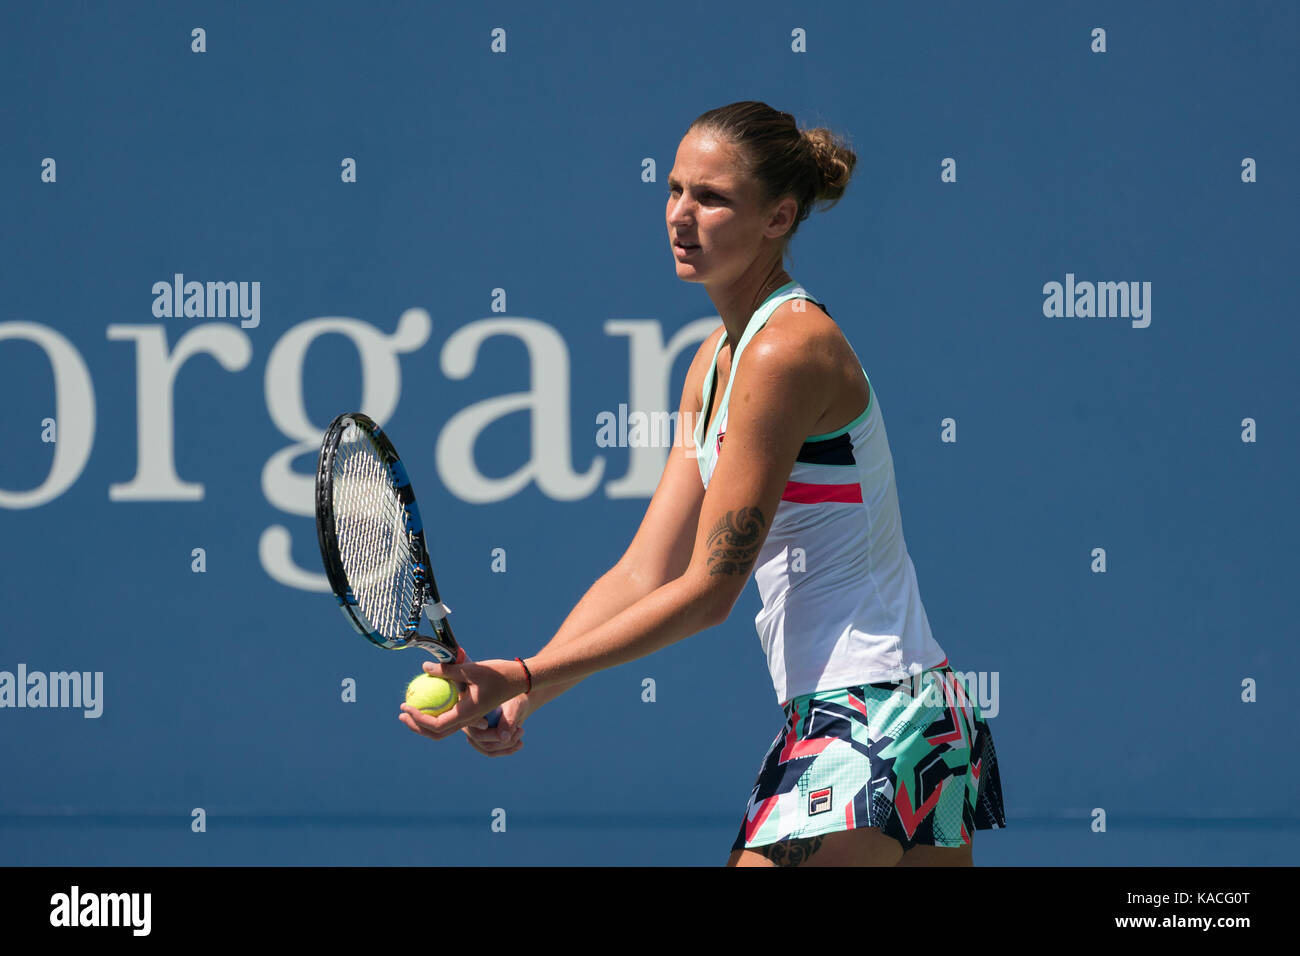 Karolina pliskova (CZE) compitiendo en el US Open tenis Campeonato 2017 Foto de stock